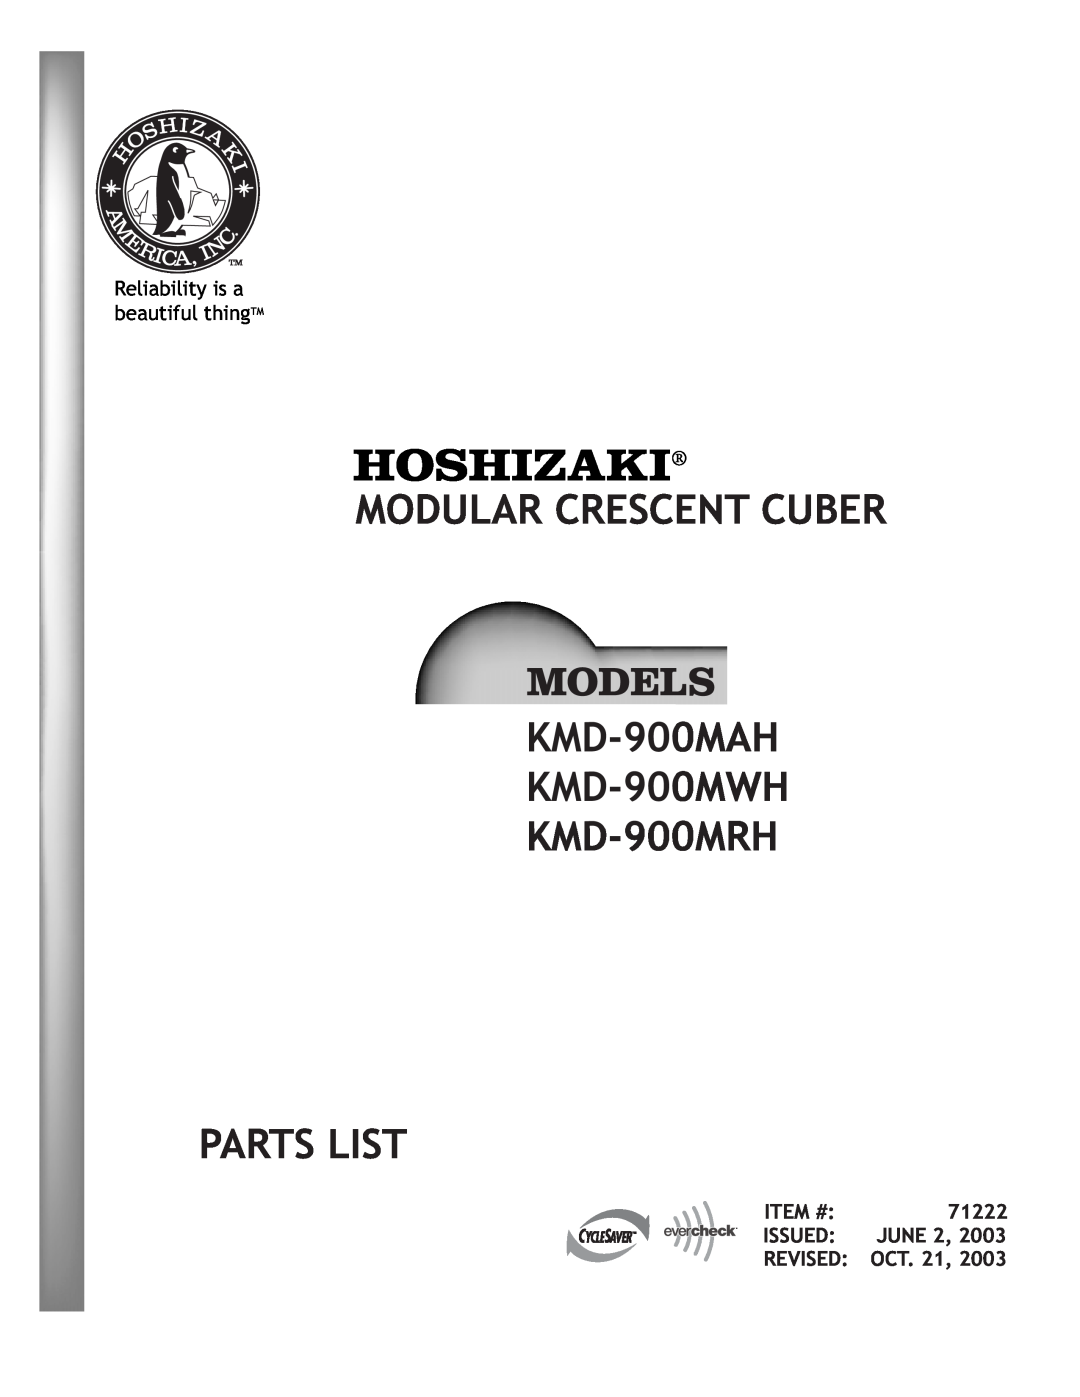 Hoshizaki instruction manual MODULAR CRESCENT CUBER KMD-700MAH KMD-700MWH KMD-700MRH KMD-900MAH, Issued, 2003, Revised 